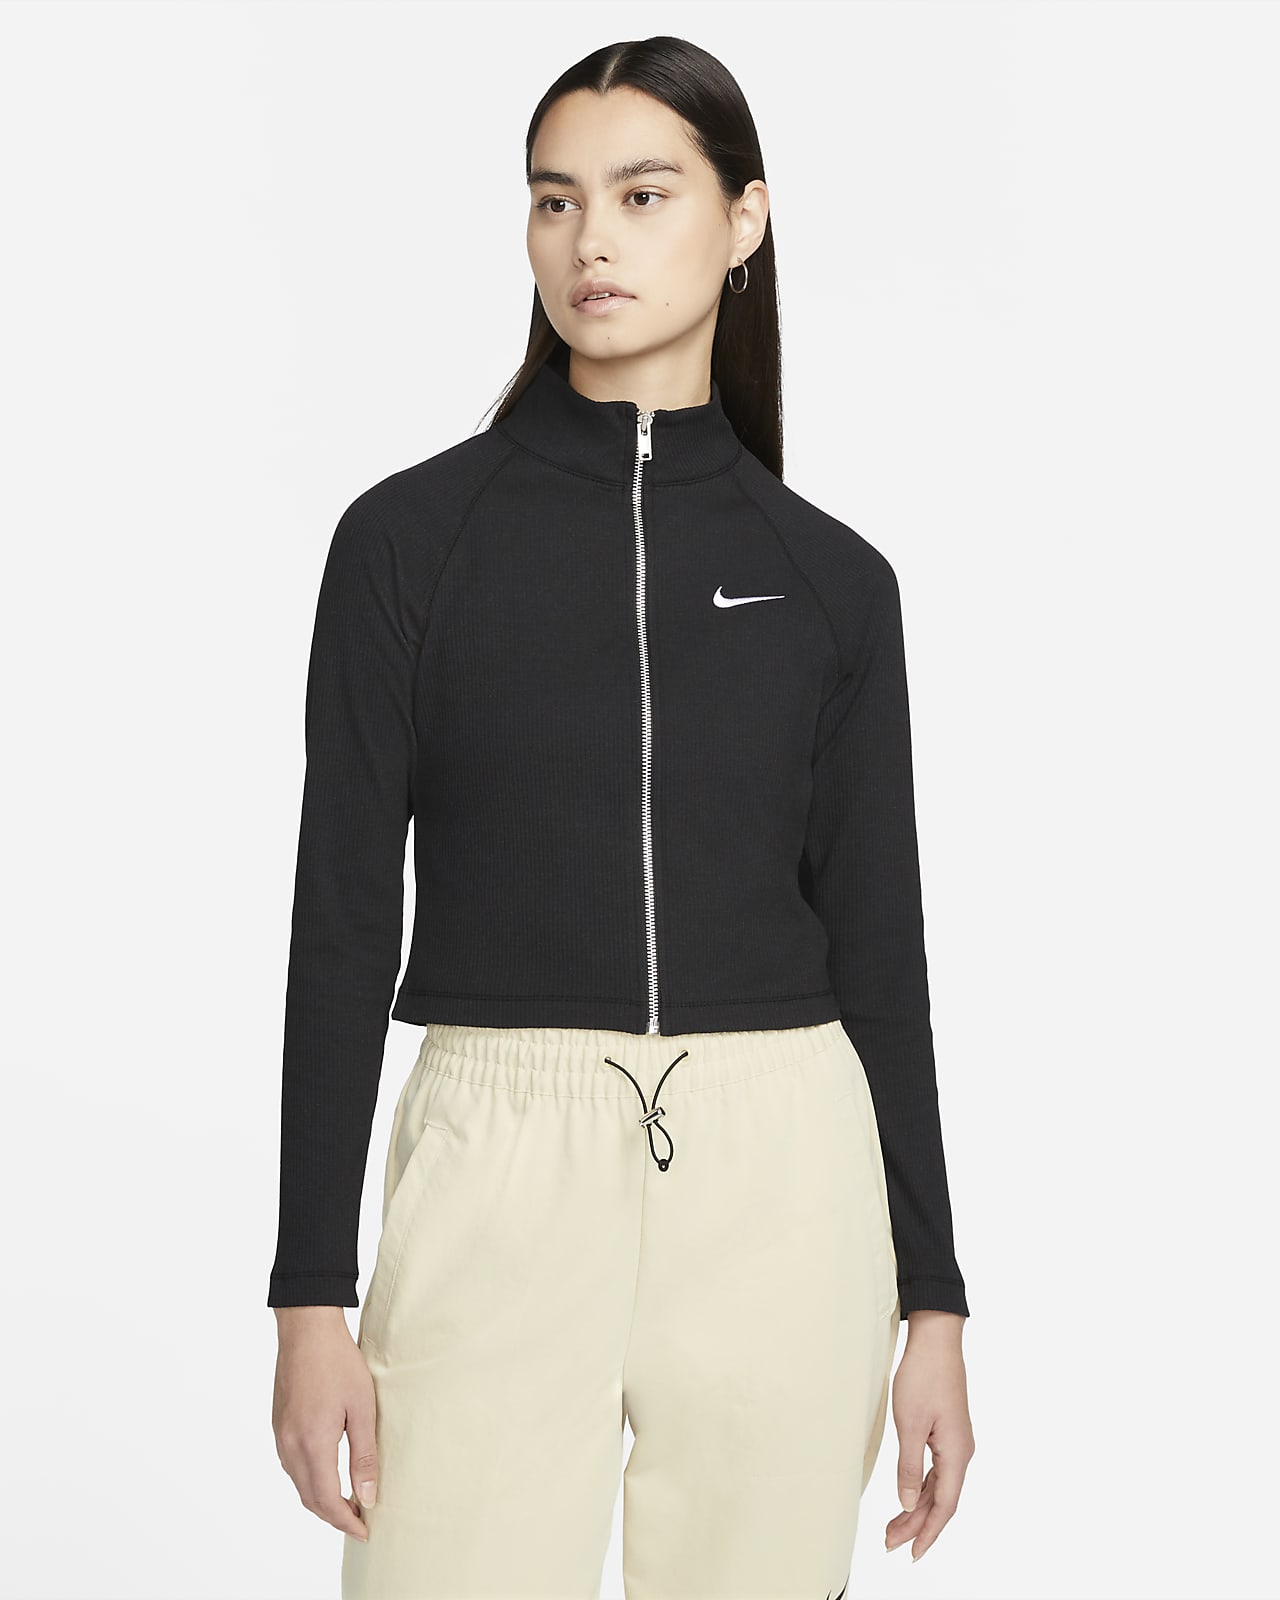 Kurtka damska Nike Sportswear. Nike PL